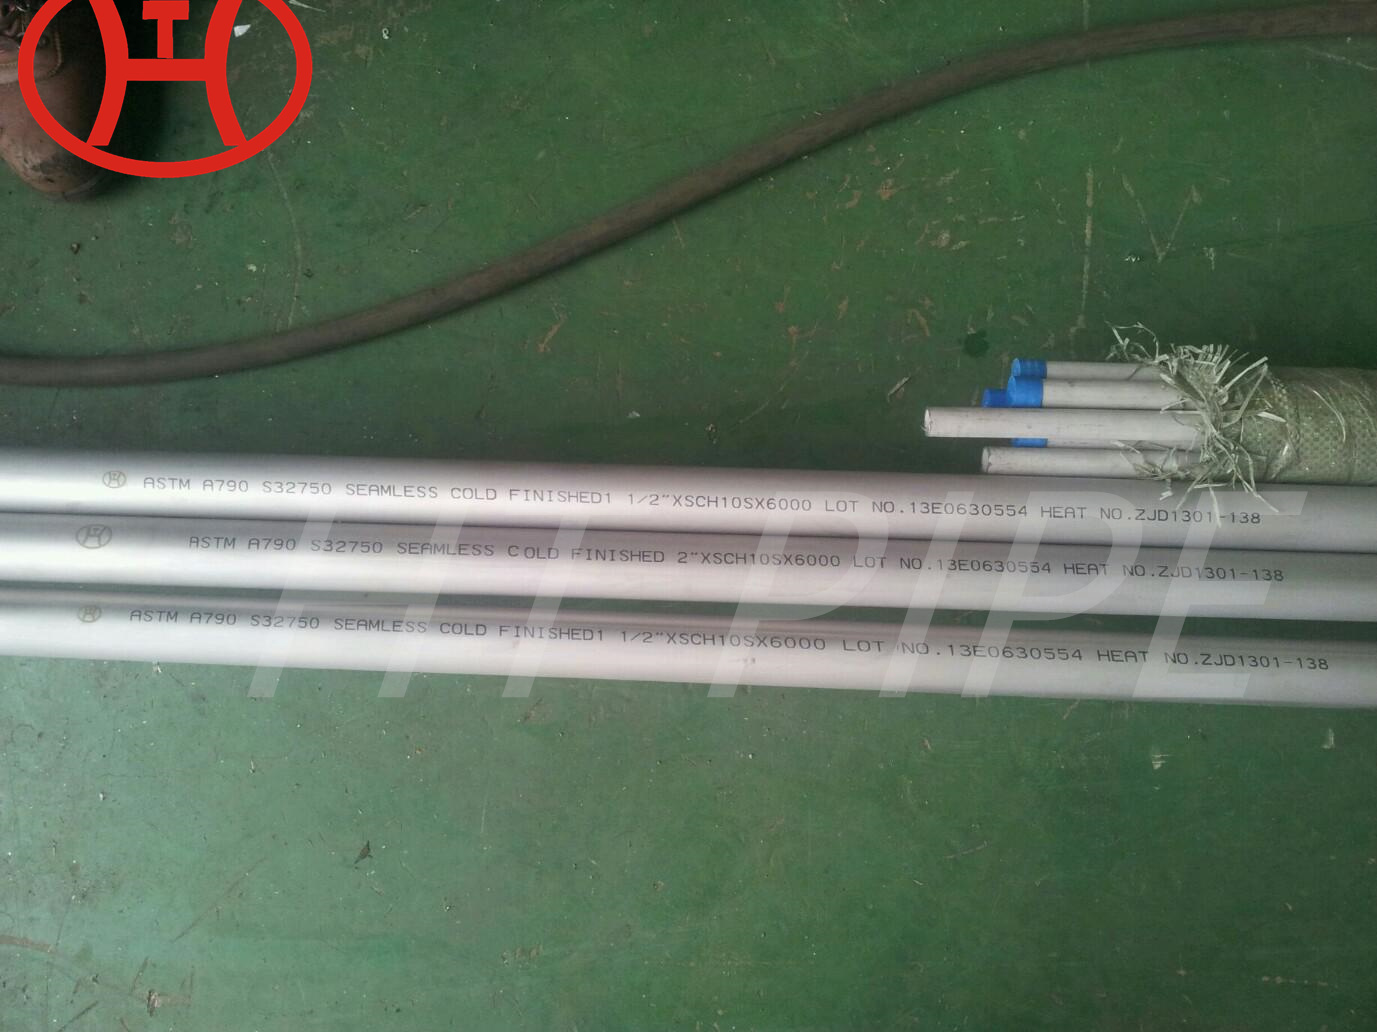 acero inoxidable tubos y tuberias ASTM A790 S32750 1.4410